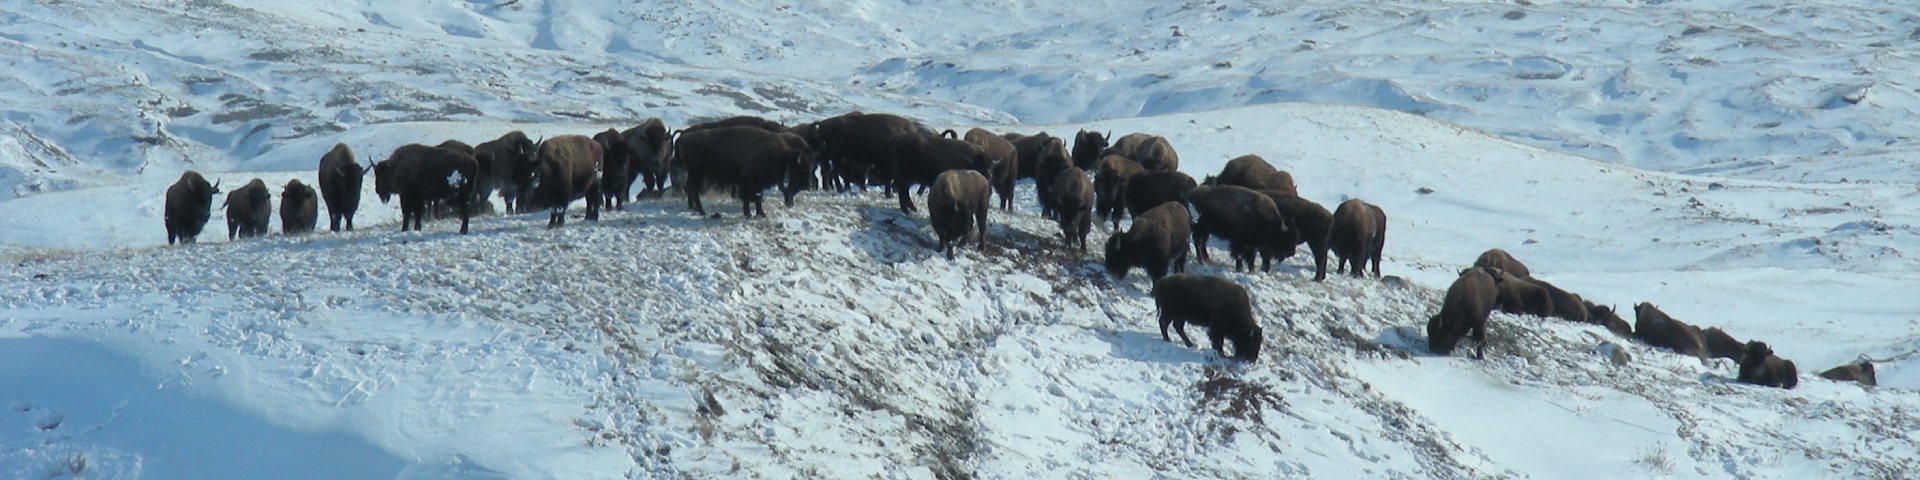 Vue de bison sur une colline